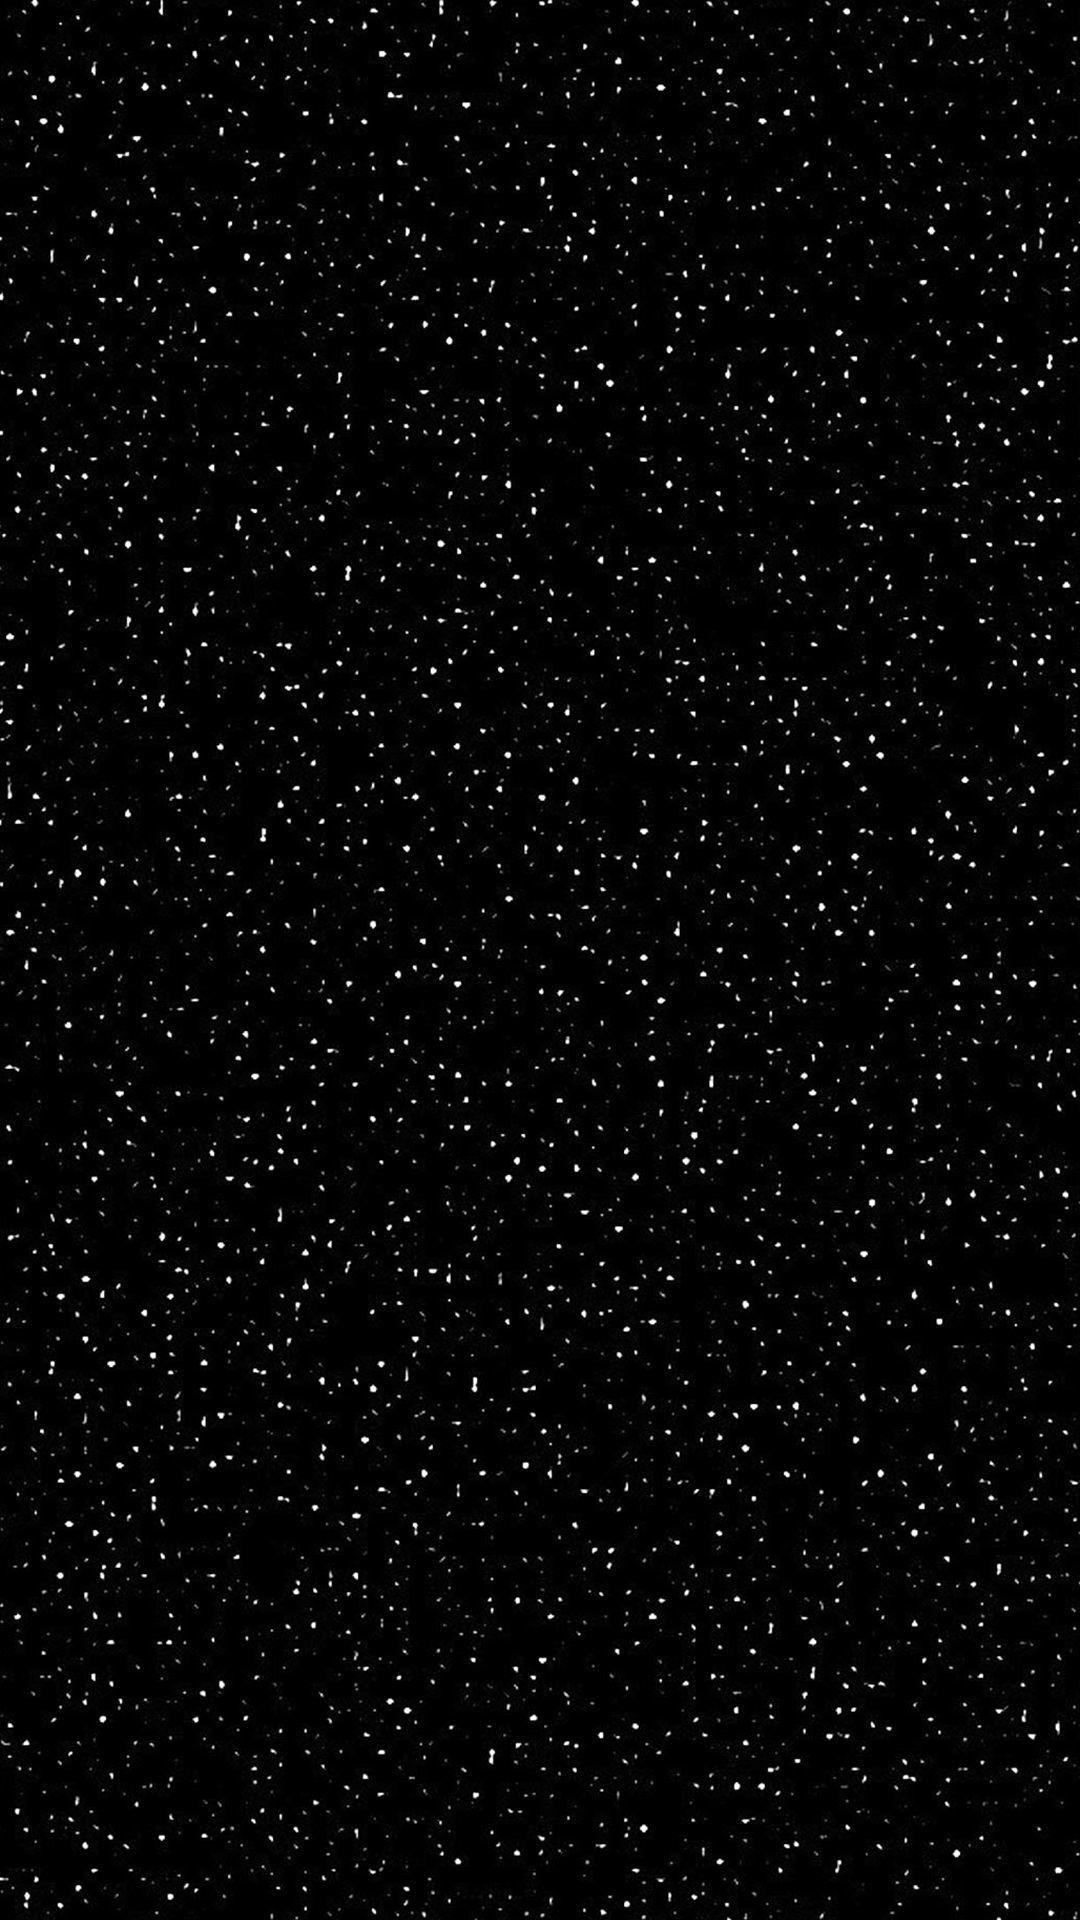 70 Starry Night Sky Wallpaper  WallpaperSafari